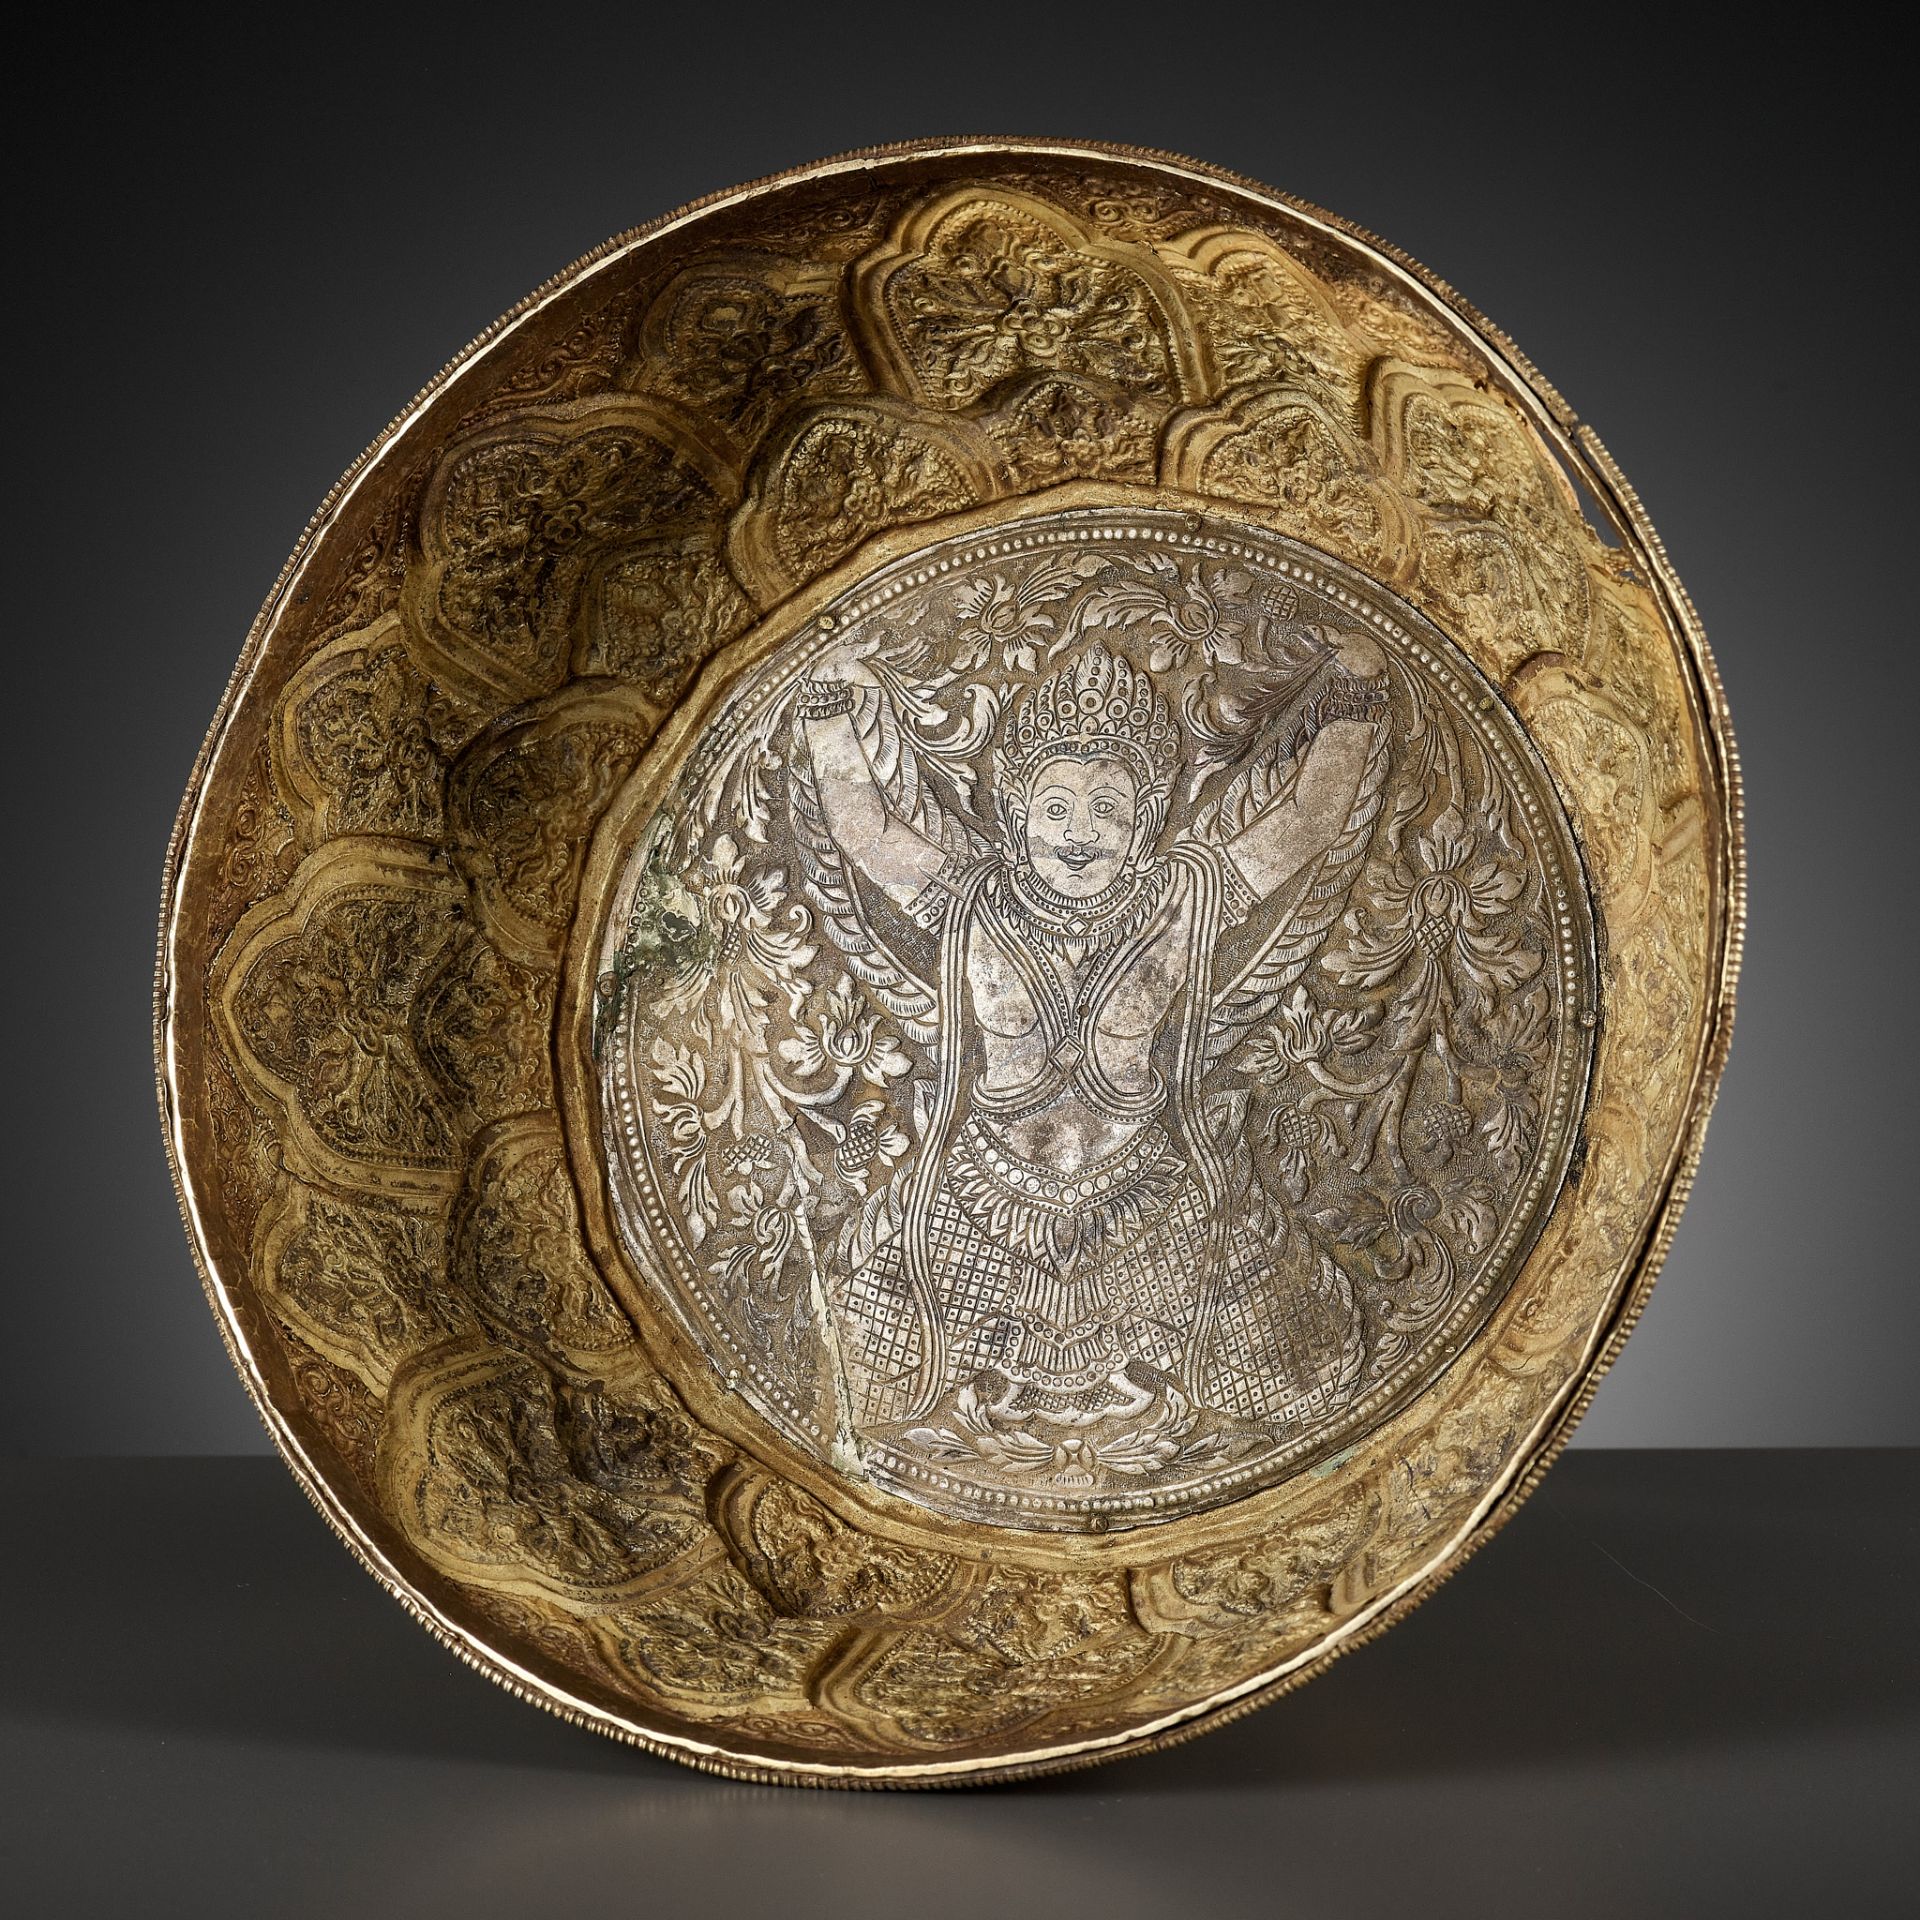 A SILVER-INLAID GOLD REPOUSSÉ BOWL DEPICTING GARUDA, VIETNAM,FORMER KINGDOMS OF CHAMPA,CIRCA 10TH C.